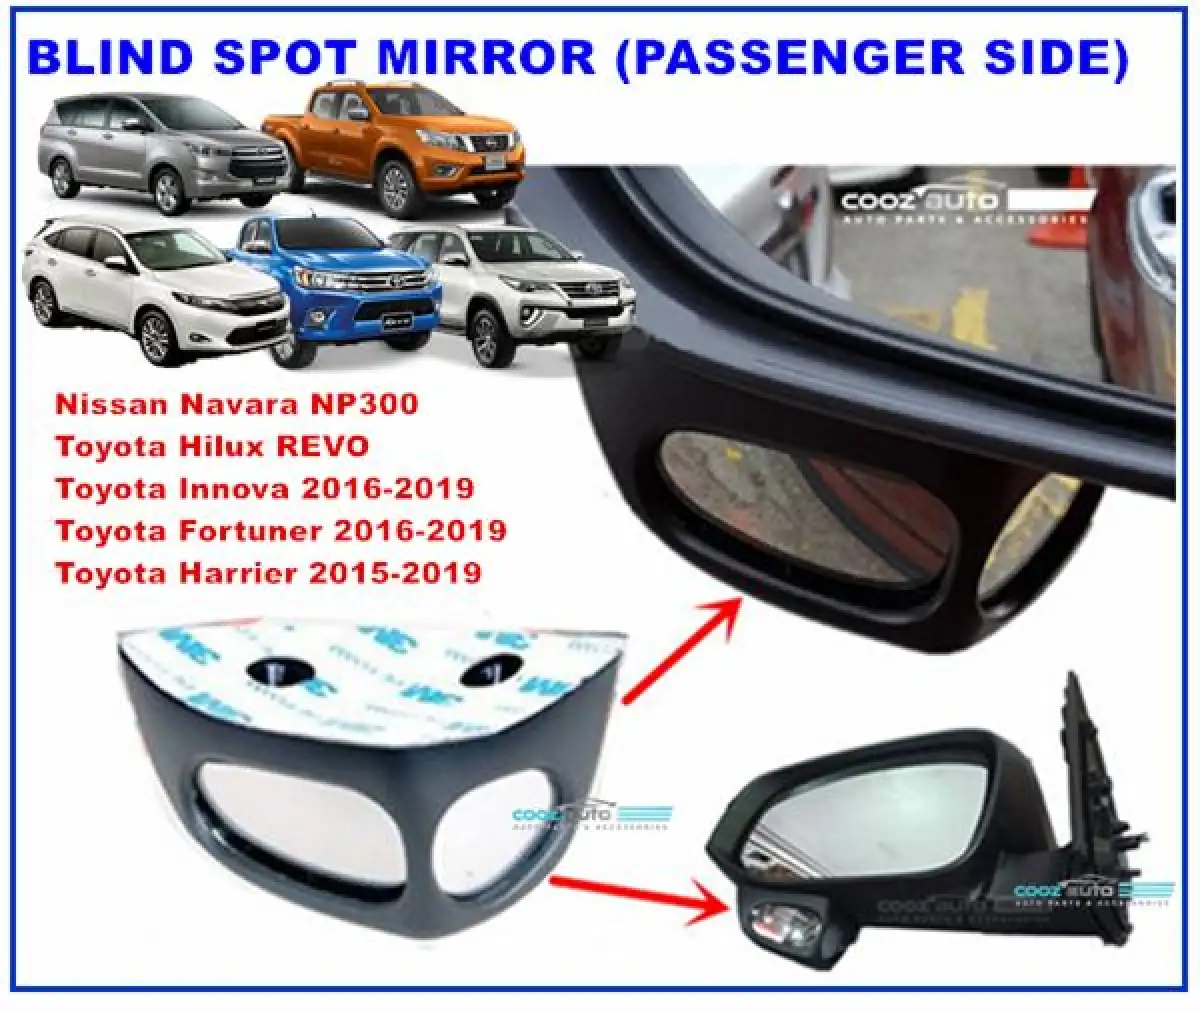 Toyota Innova 2018 Parking Blind, How To Add Blind Spot Mirror